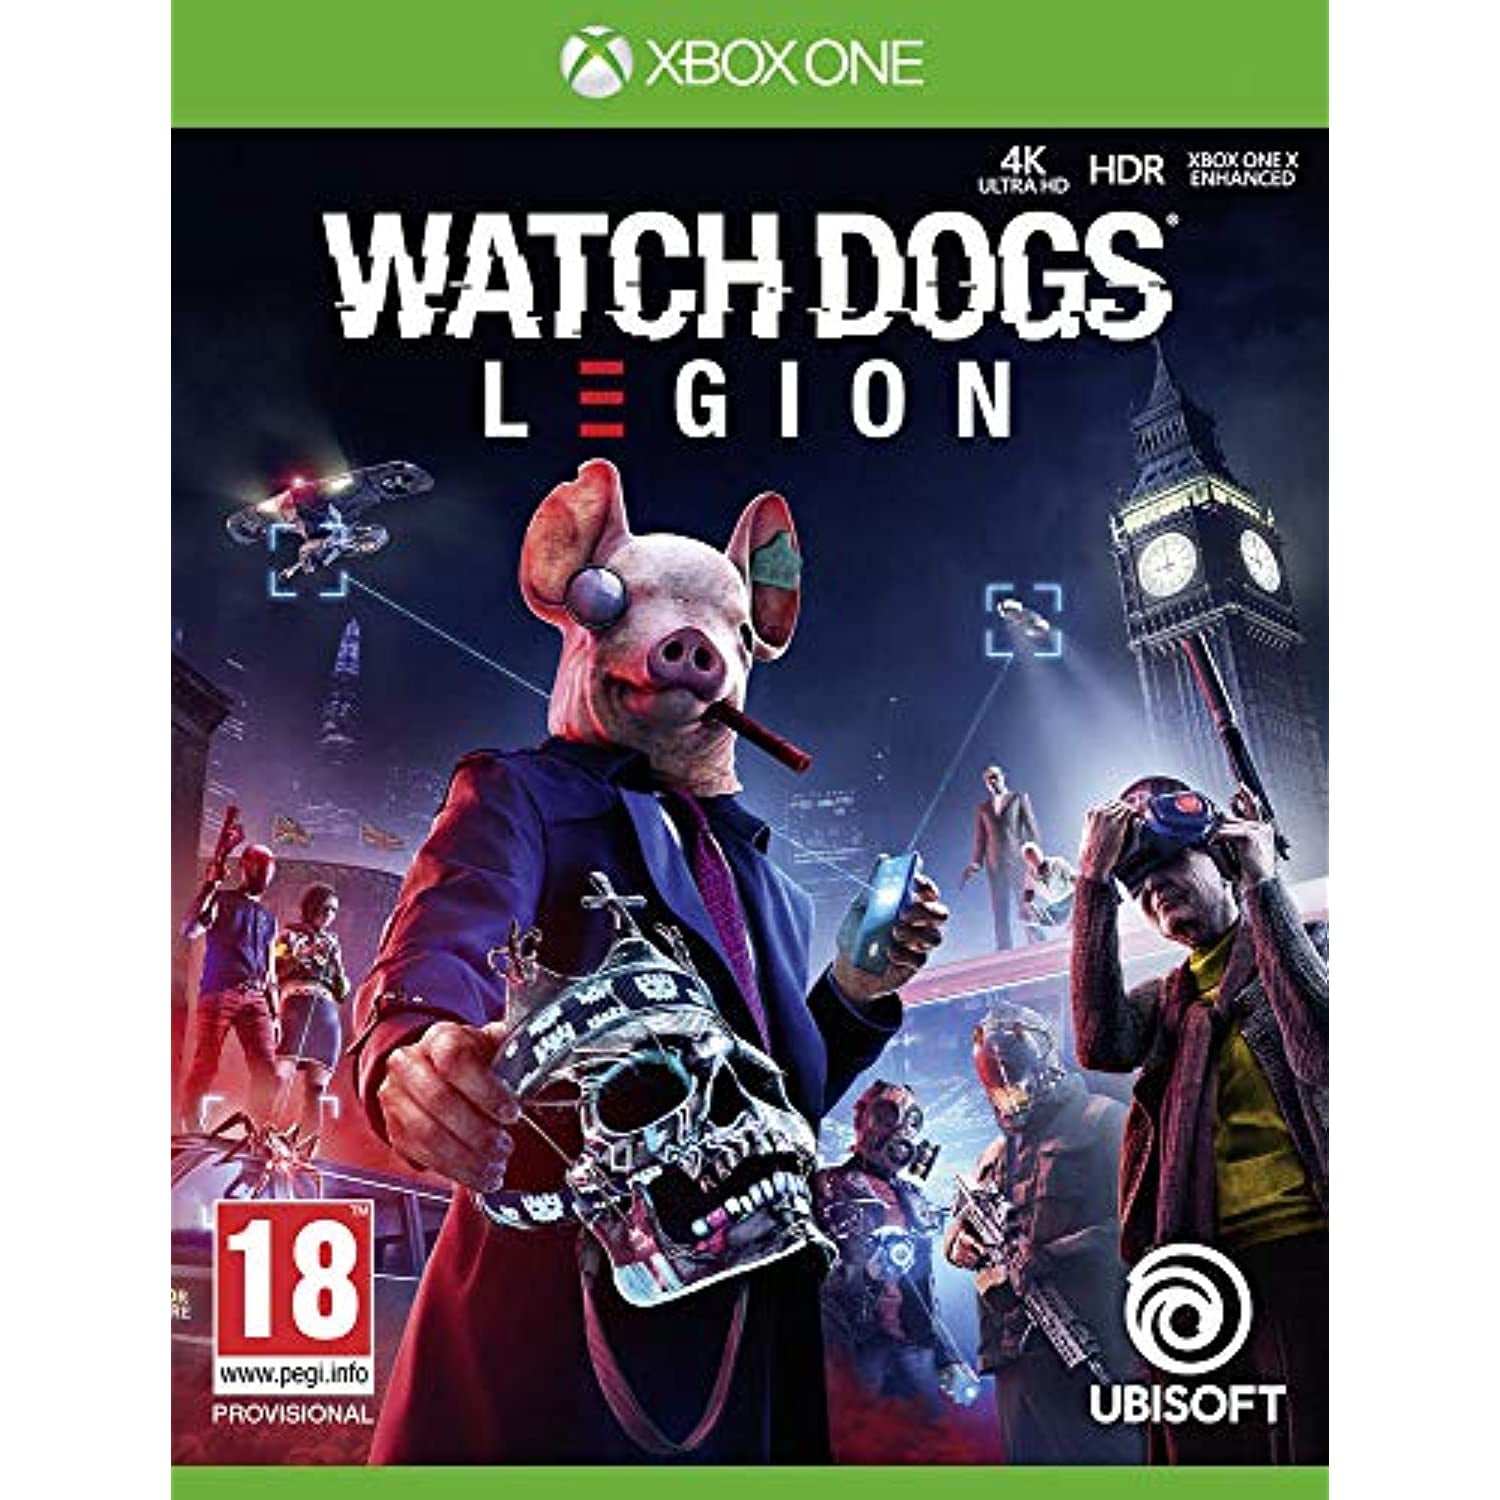 Ubisoft ps4. Ps4 watch Dogs Legion. Watch Dogs диск ps4. Вотч догс Легион иксбокс. Watch Dogs Xbox one.